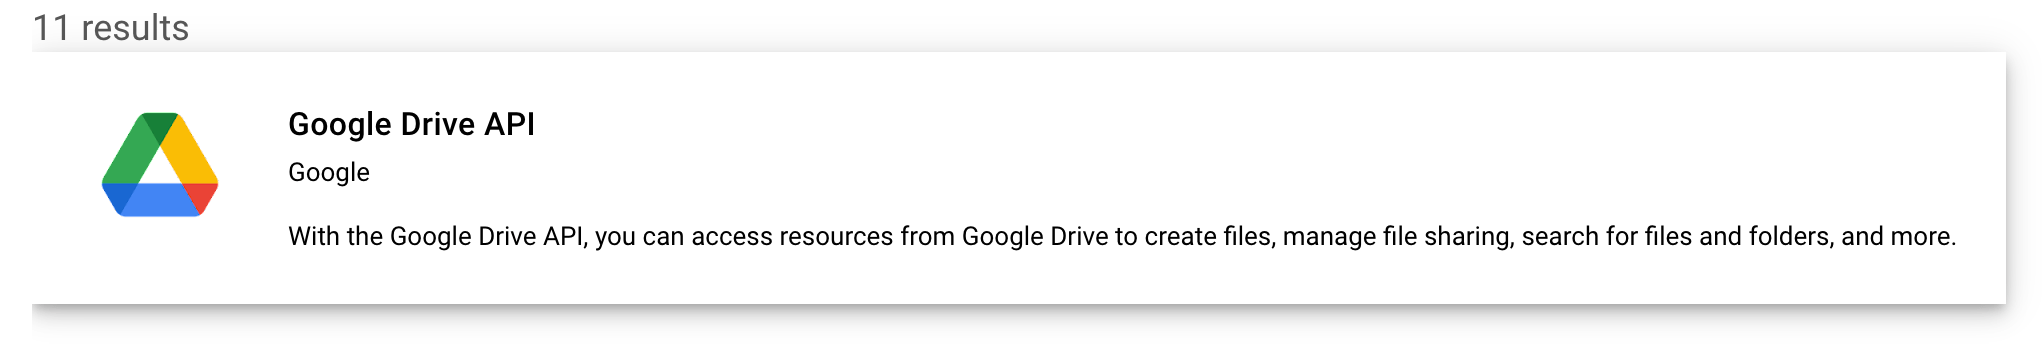 Locating the Google Drive API in Google Console